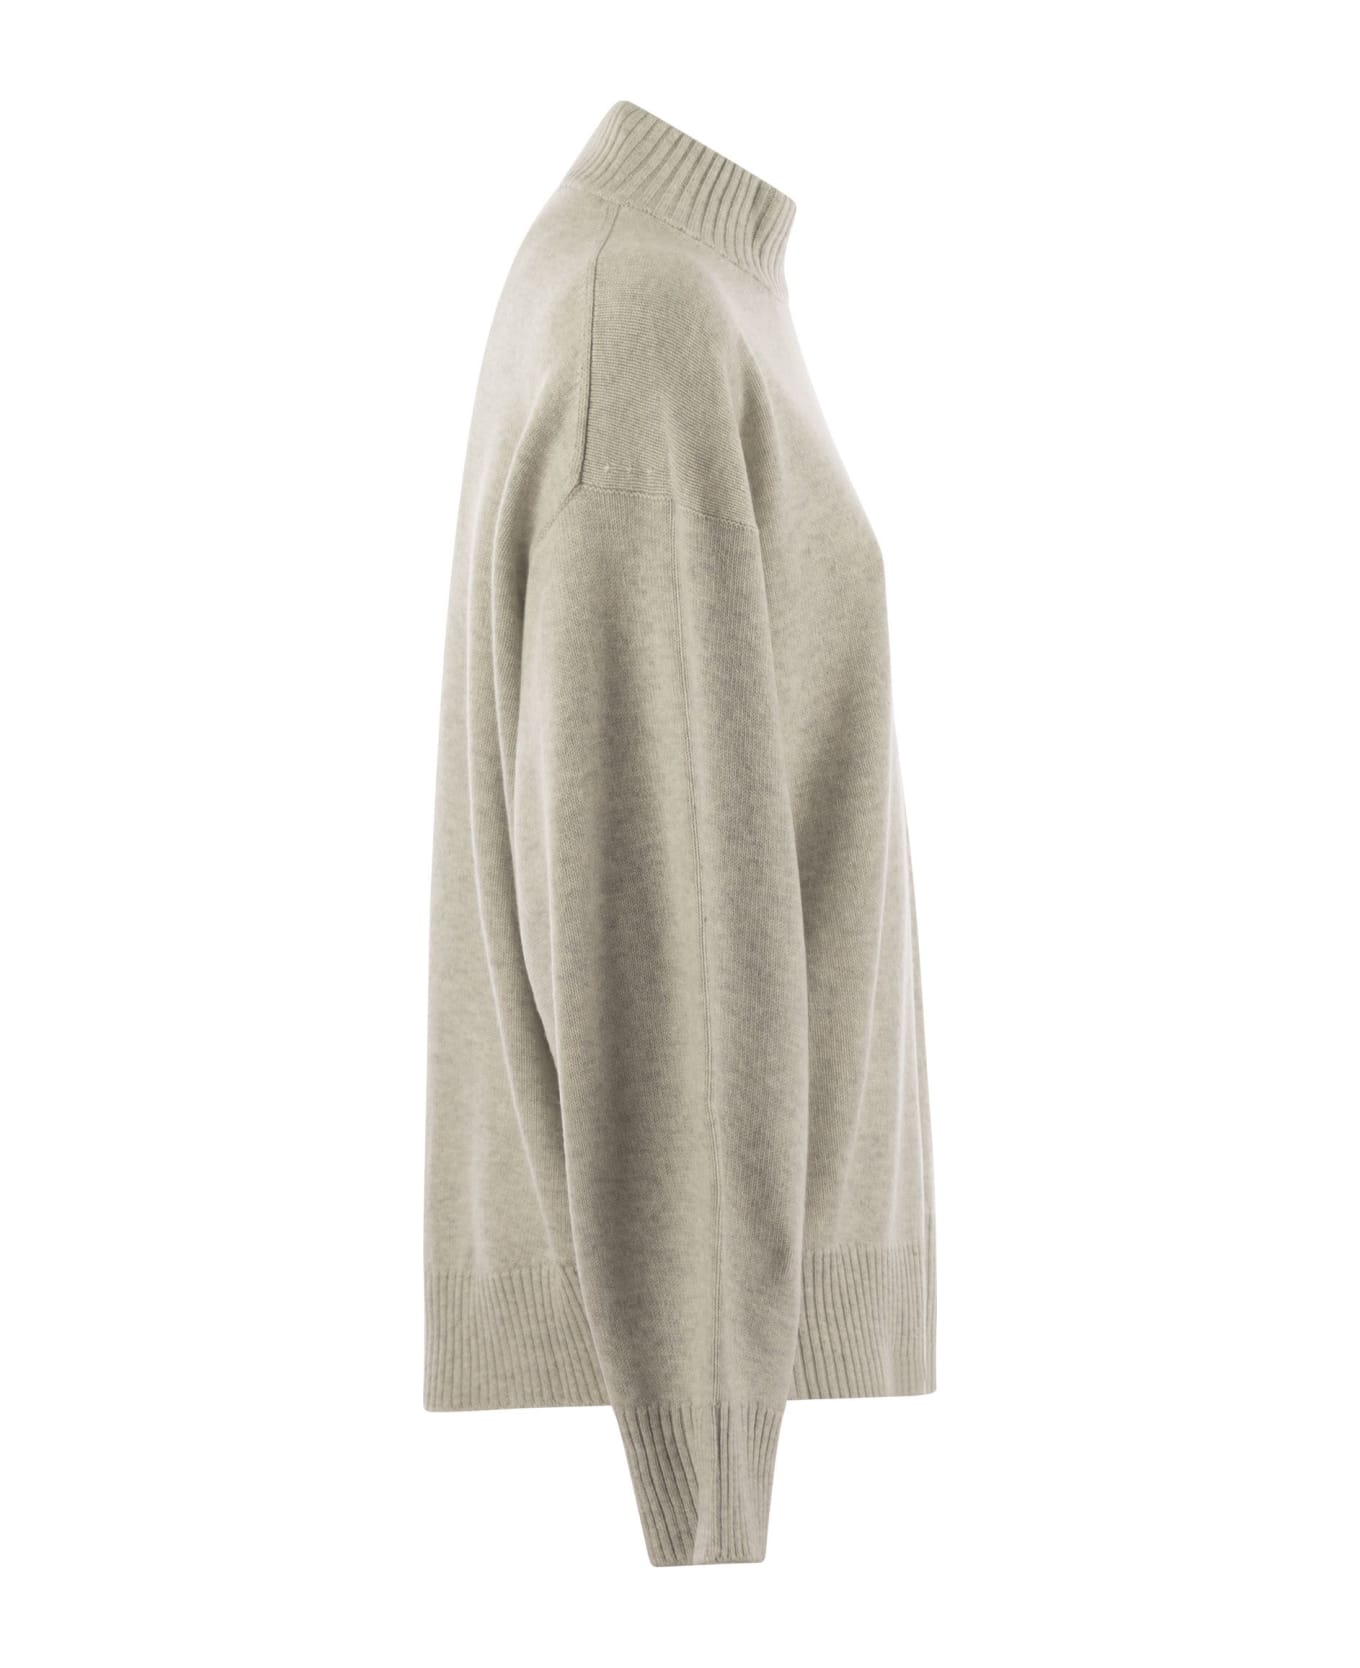 Brunello Cucinelli Cashmere Chimney Neck Sweater With Shiny Cuff Details - Light Grey